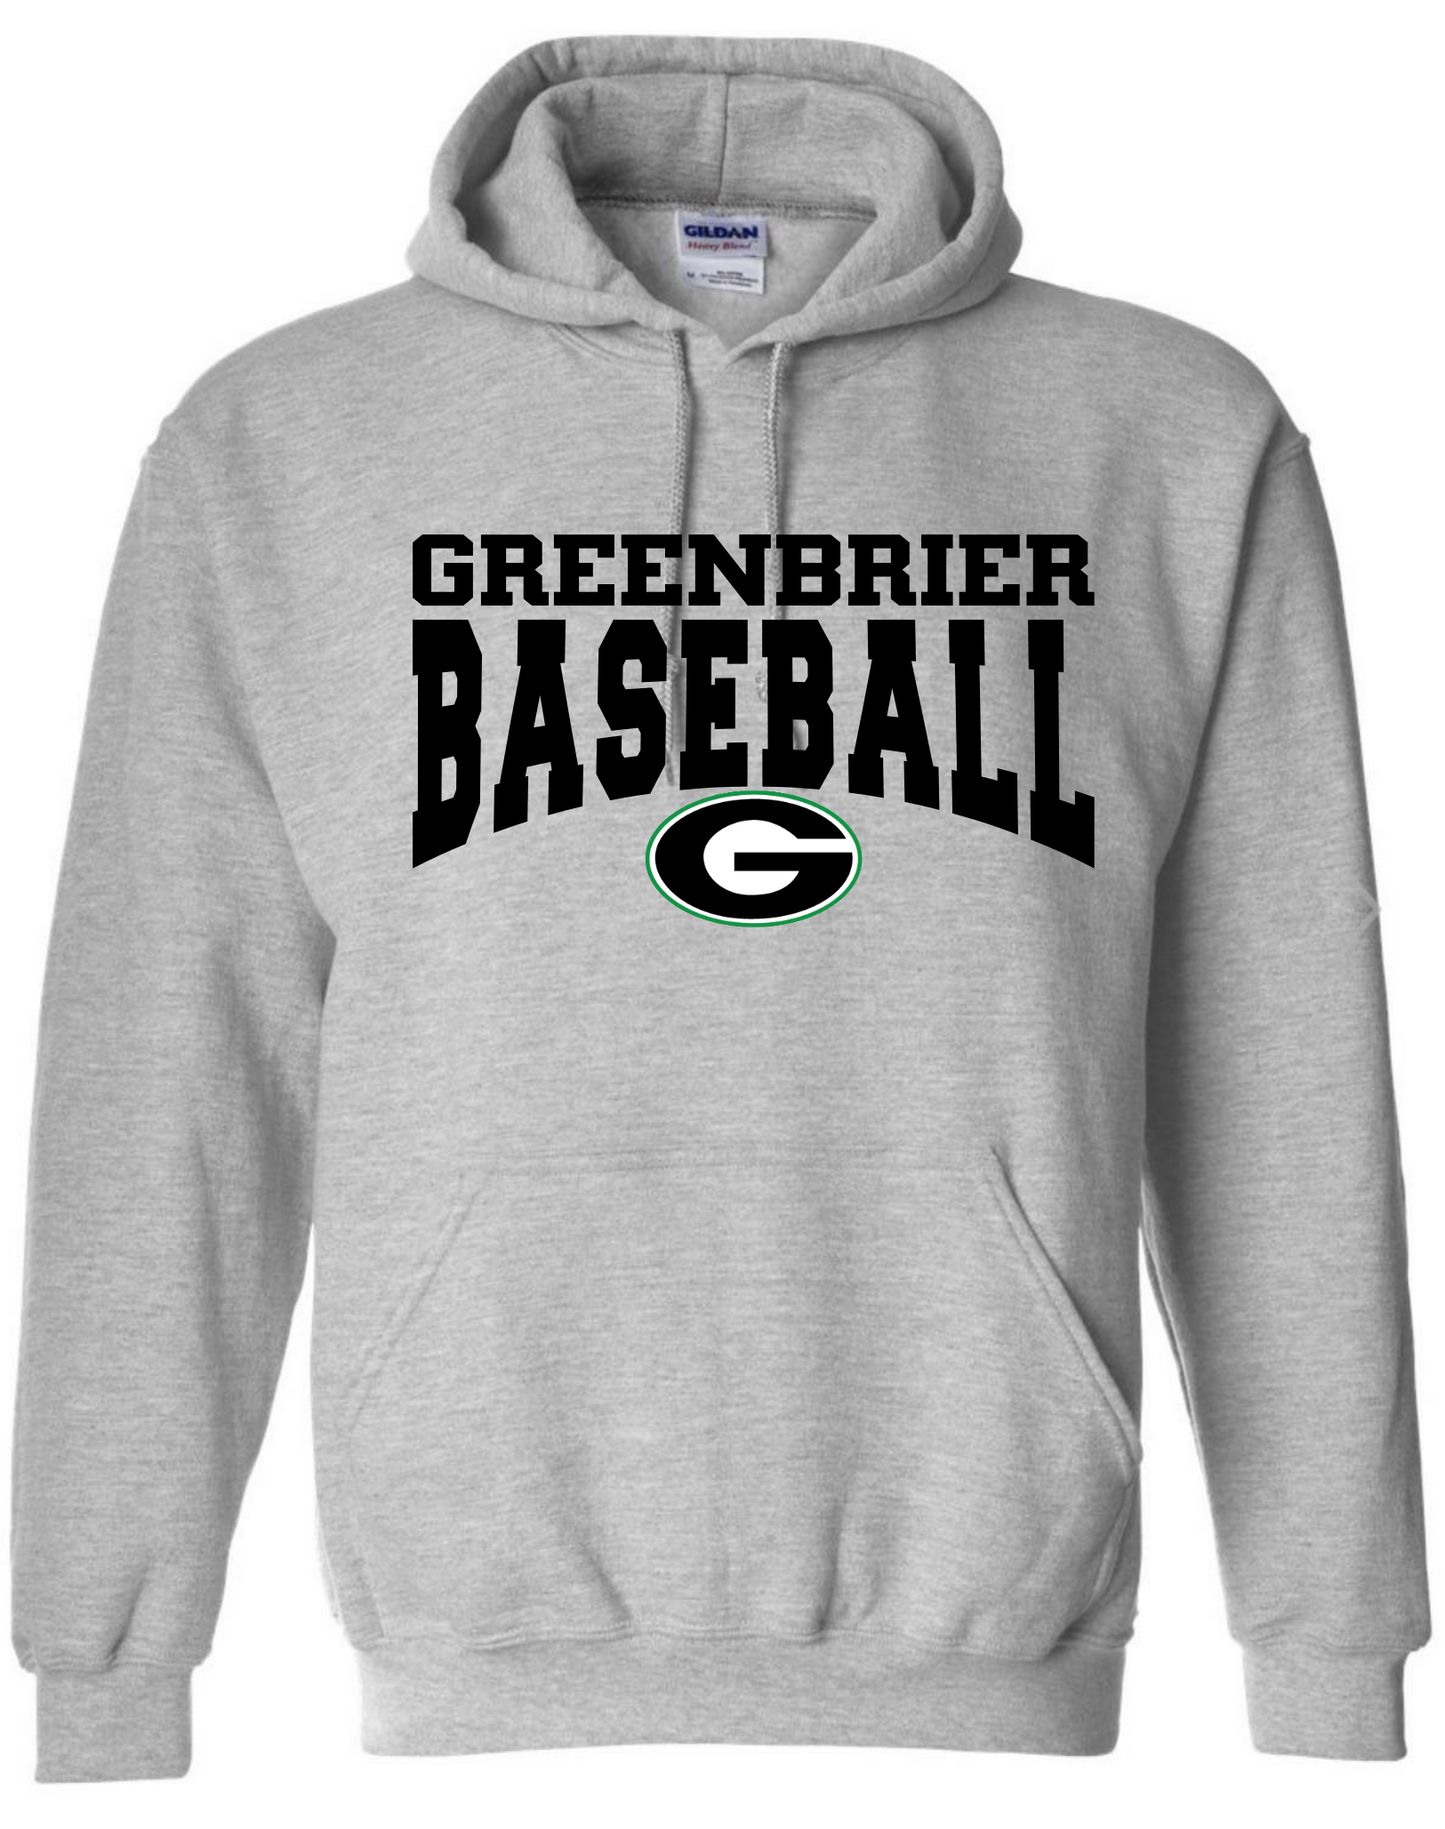 Greenbrier Baseball Hoodie